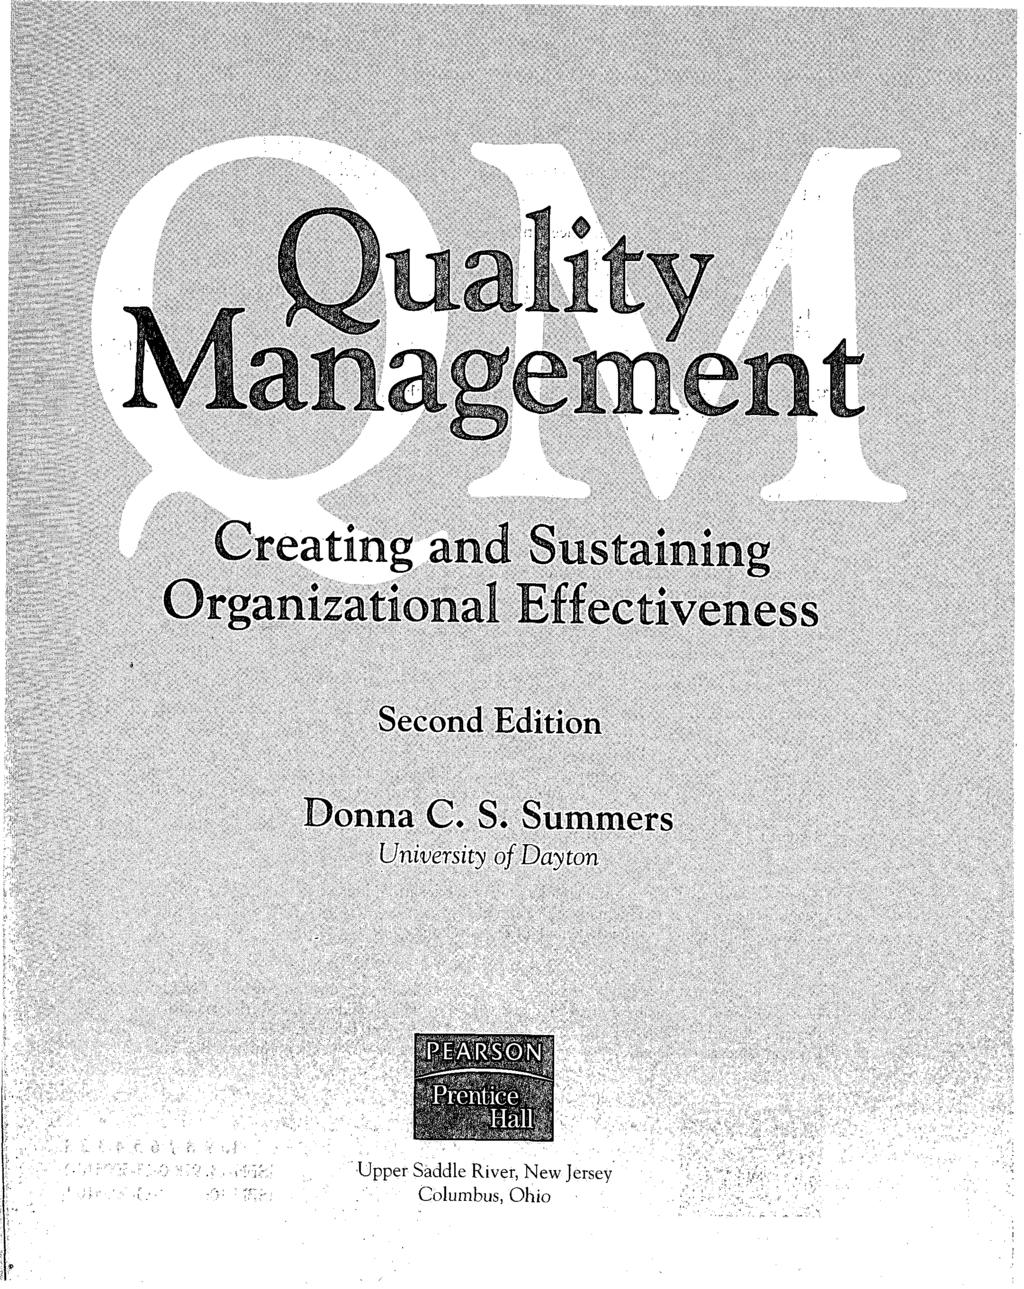 Organizational Effectiveness Second Edition